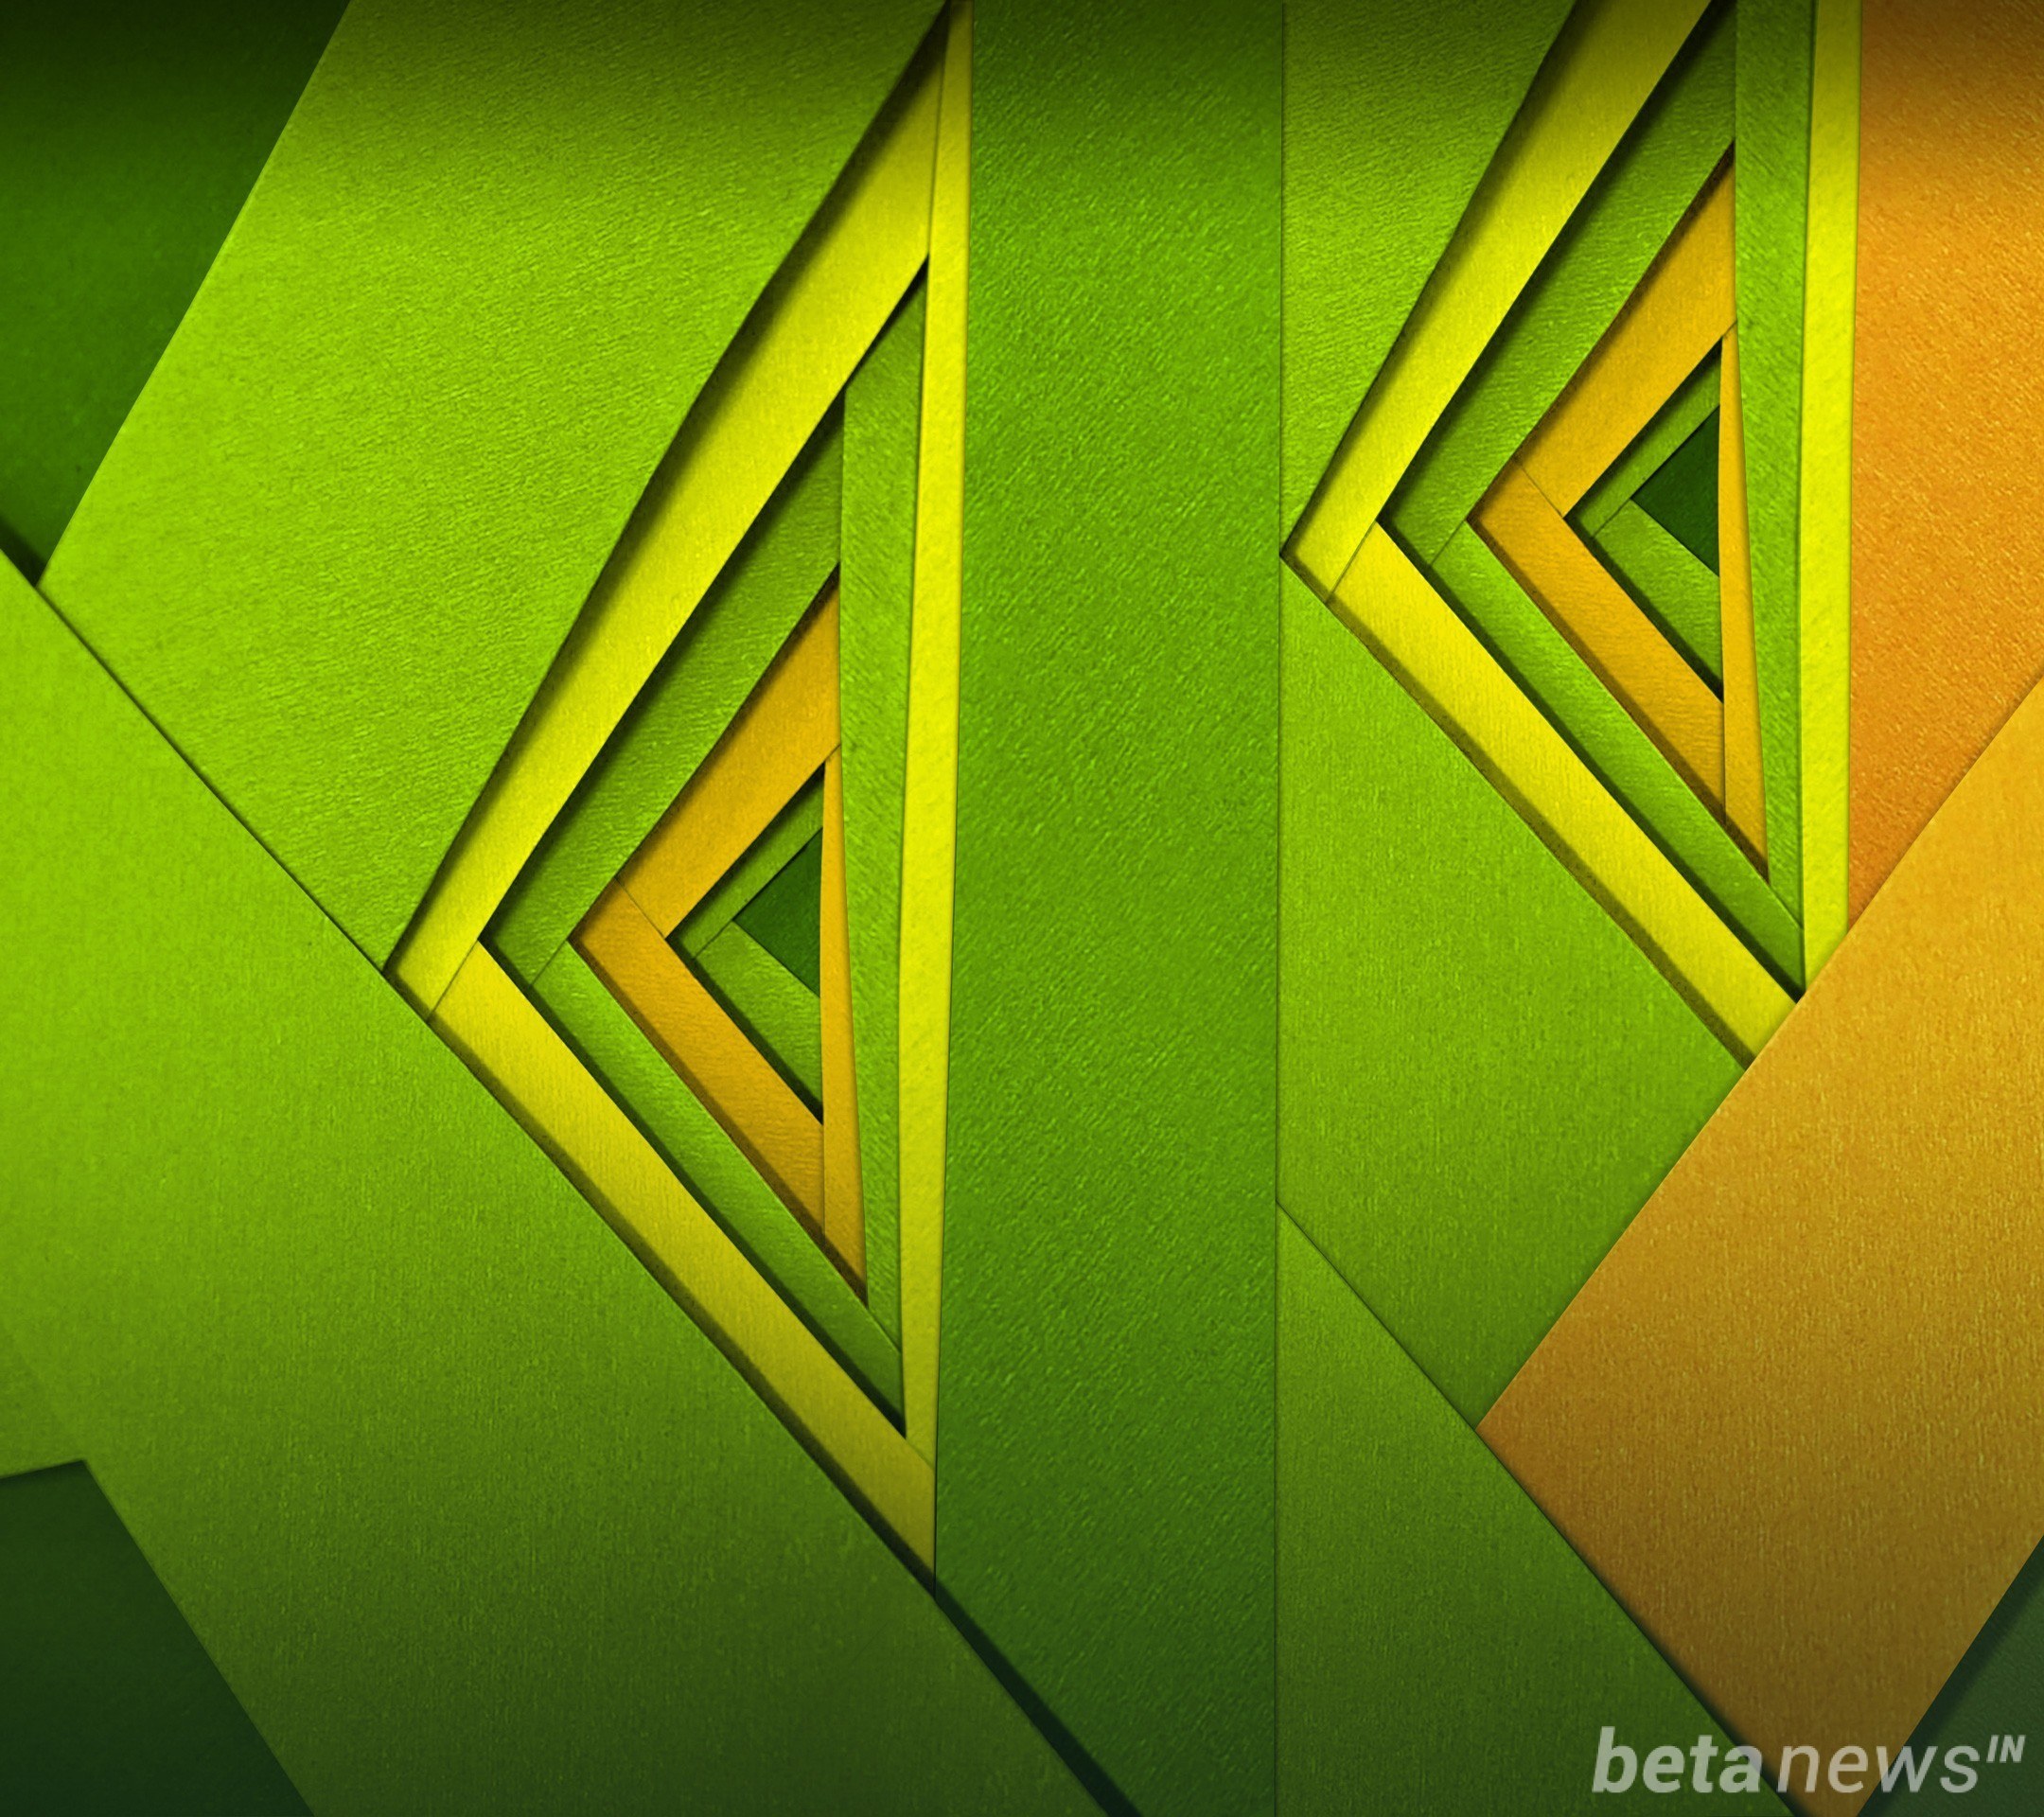 moto x style wallpaper,green,yellow,font,pattern,graphics